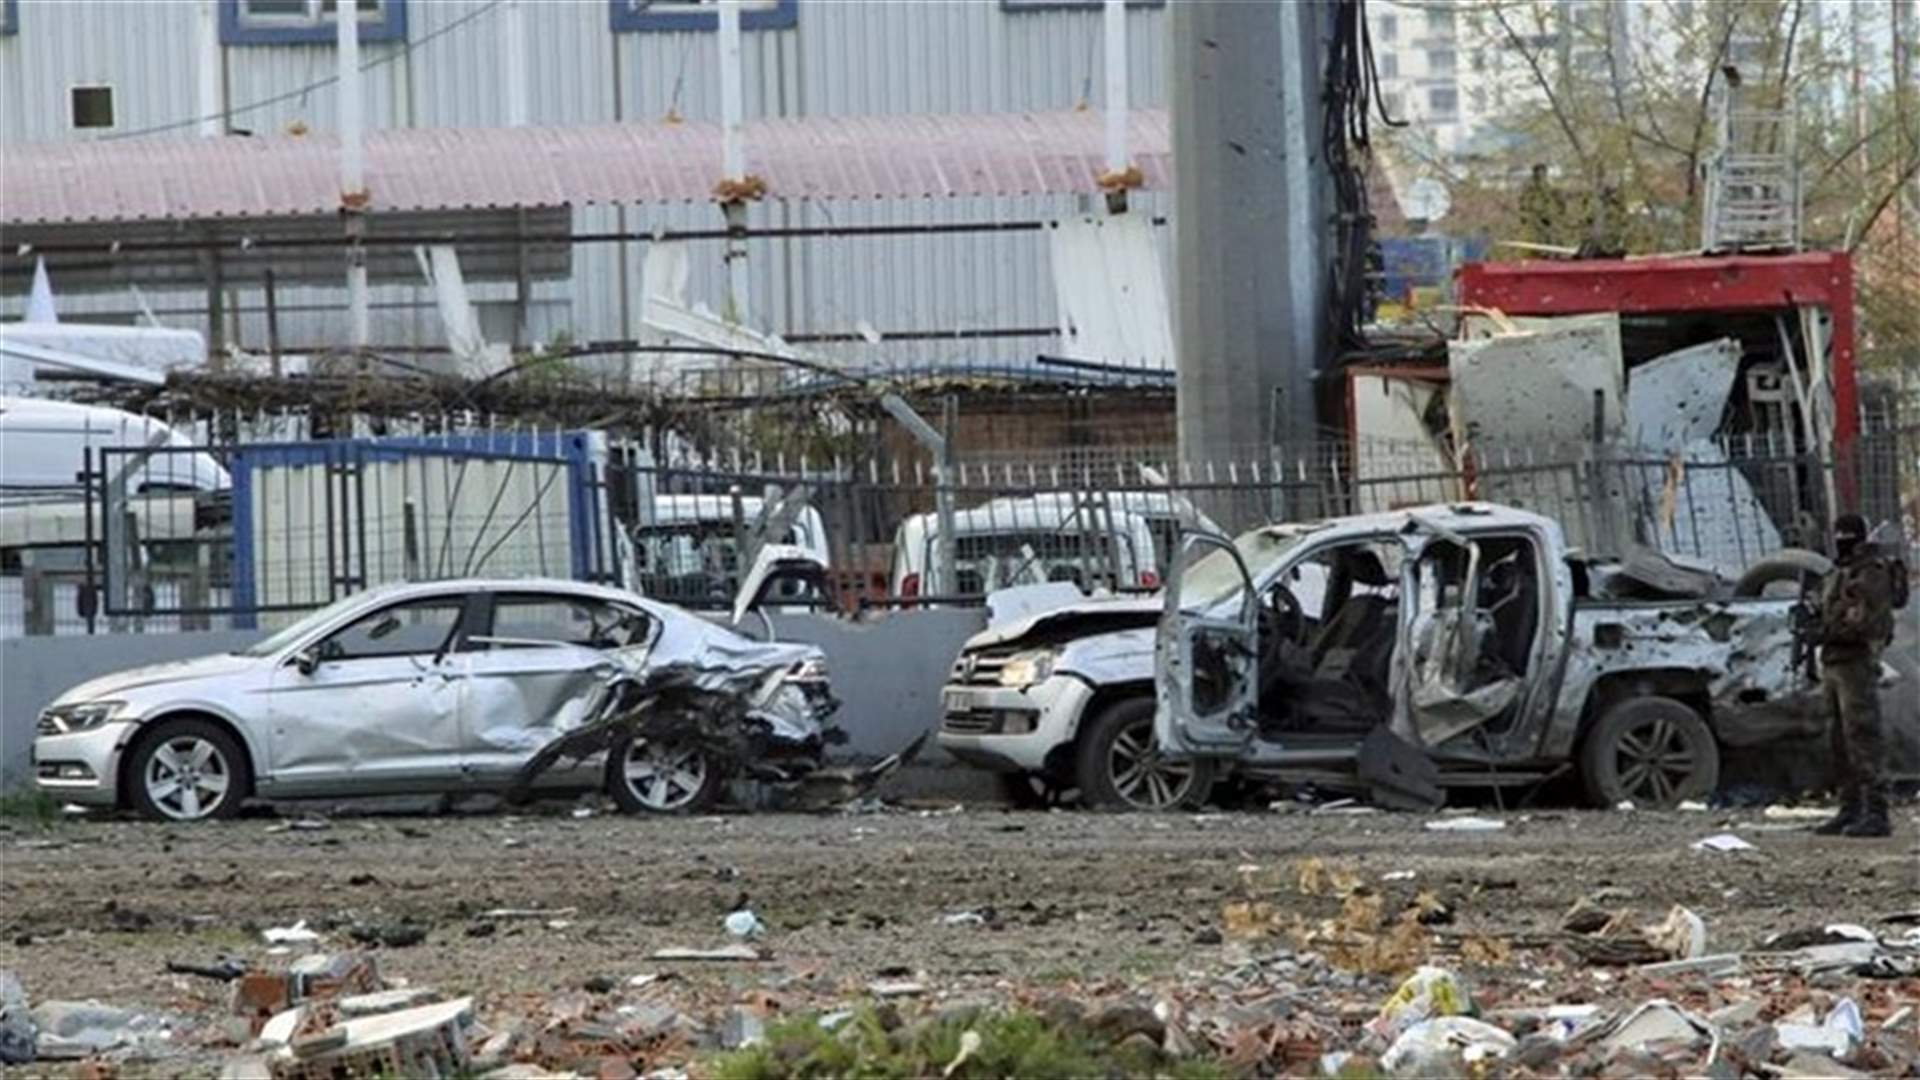 PKK militant group claims responsibility for Turkish car bombing -website